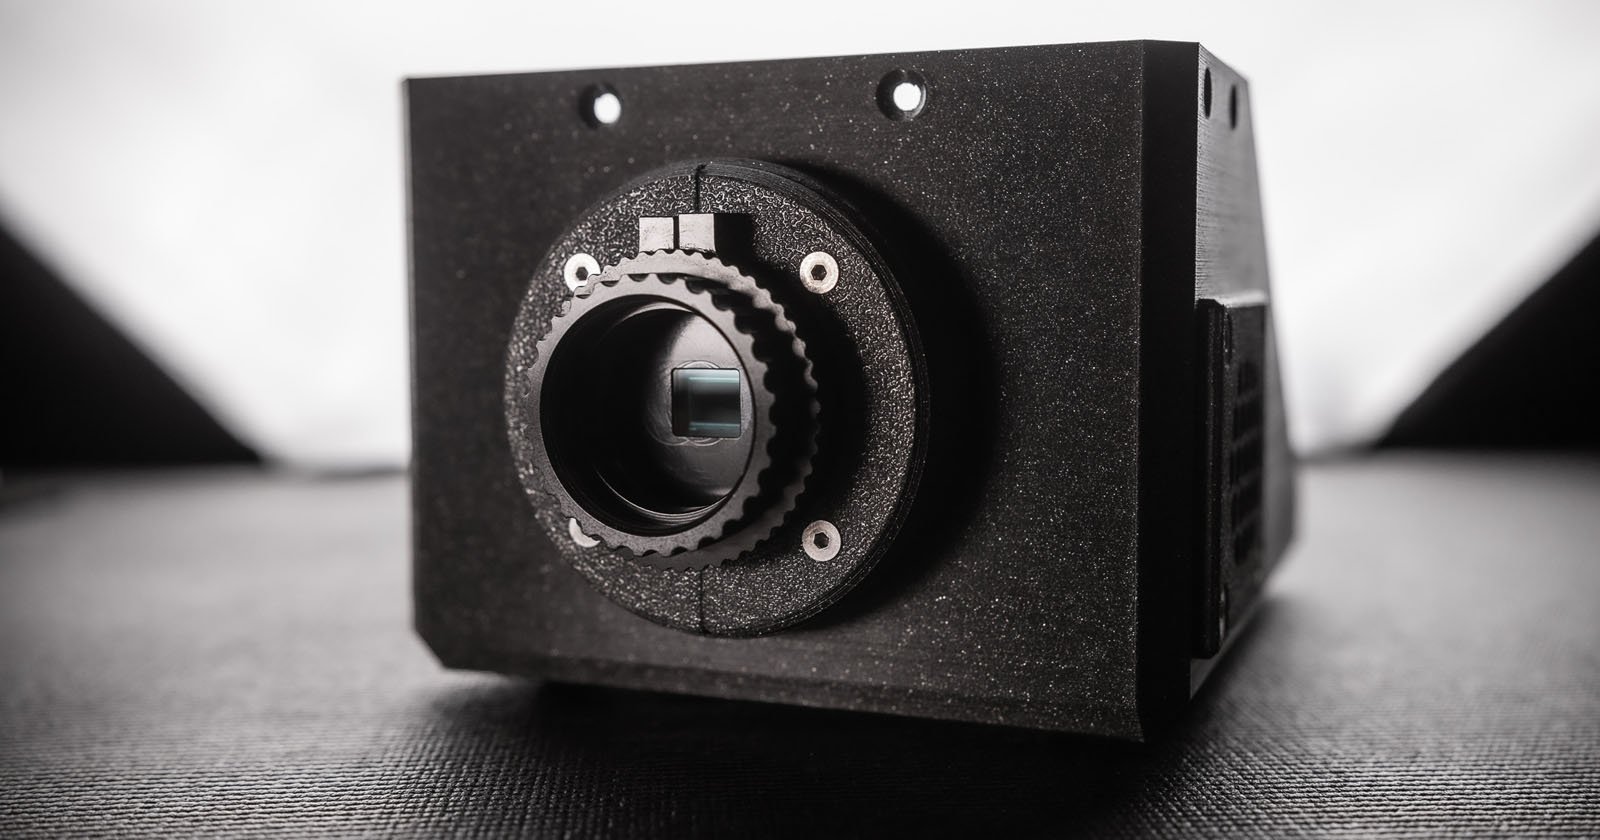 CinePi is an Open-Source Raspberry Pi-powered Cinema Camera